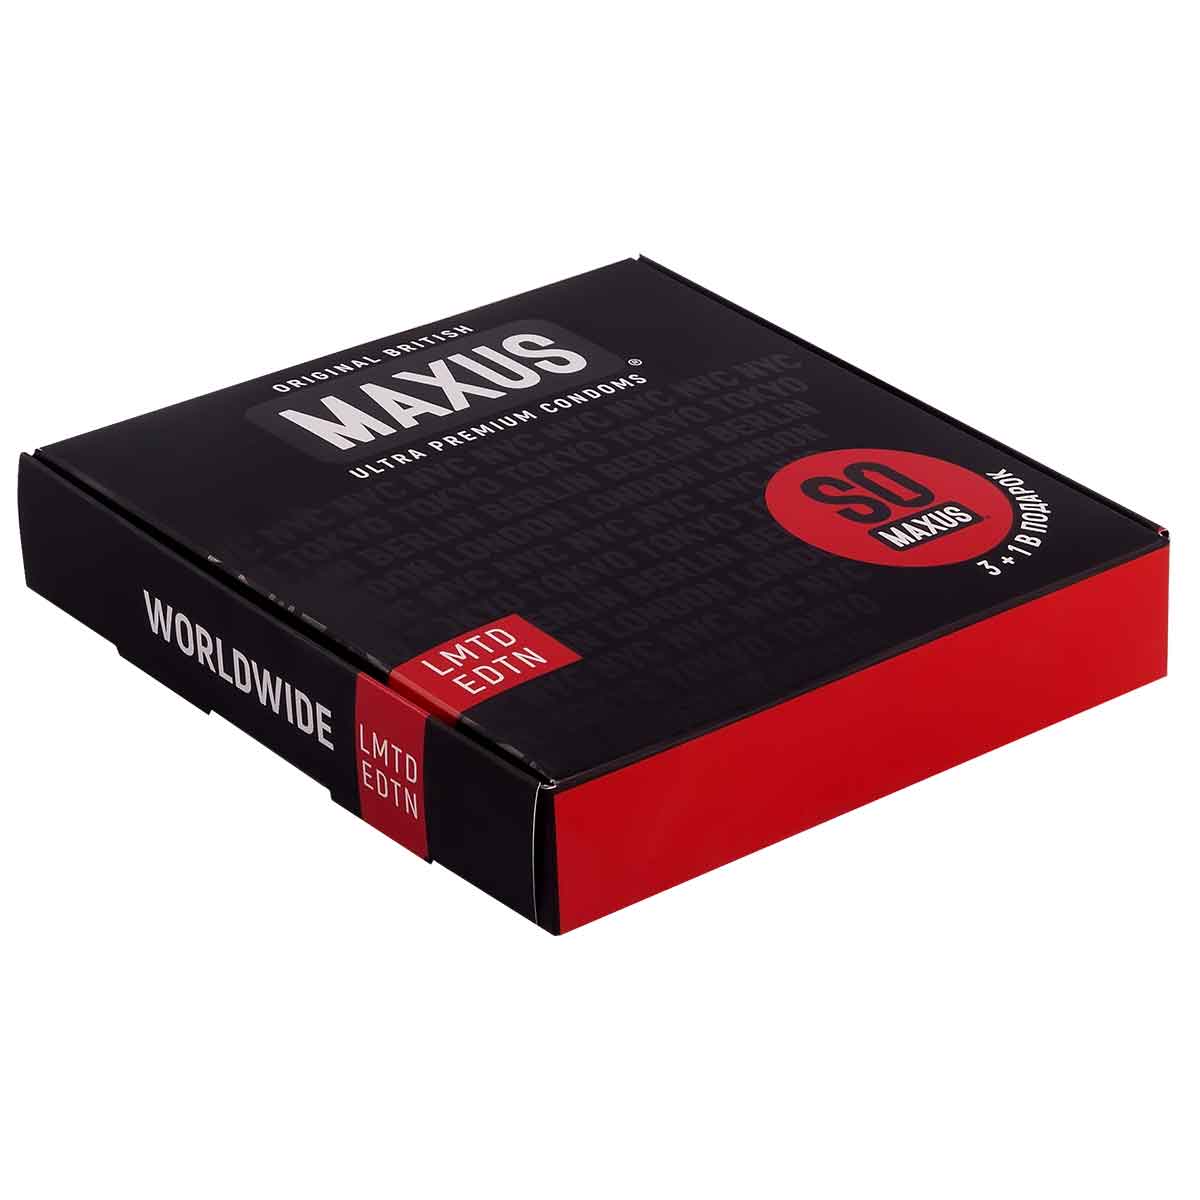 Презервативы в коробке Maxus Worldwide, 12 шт